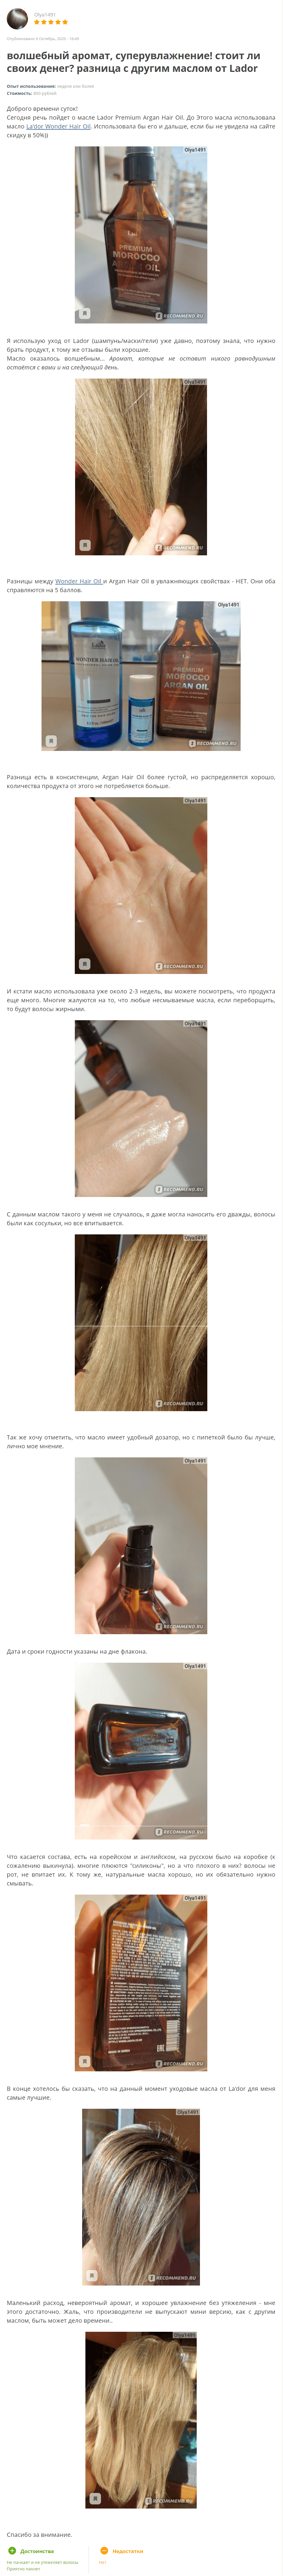 Premium Argan Hair Oil [La'dor] отзыв 1 (1)